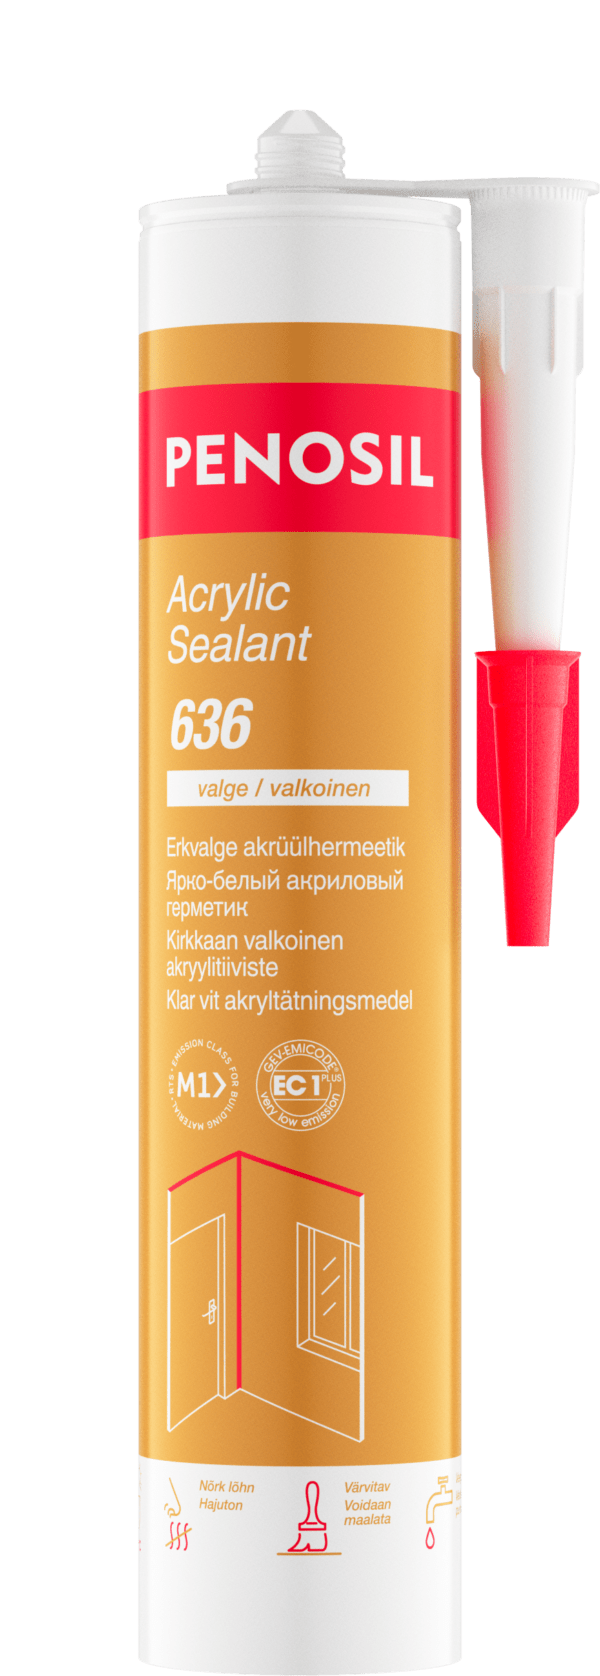 Penosil Acrylic_Sealant_636_EE_FI